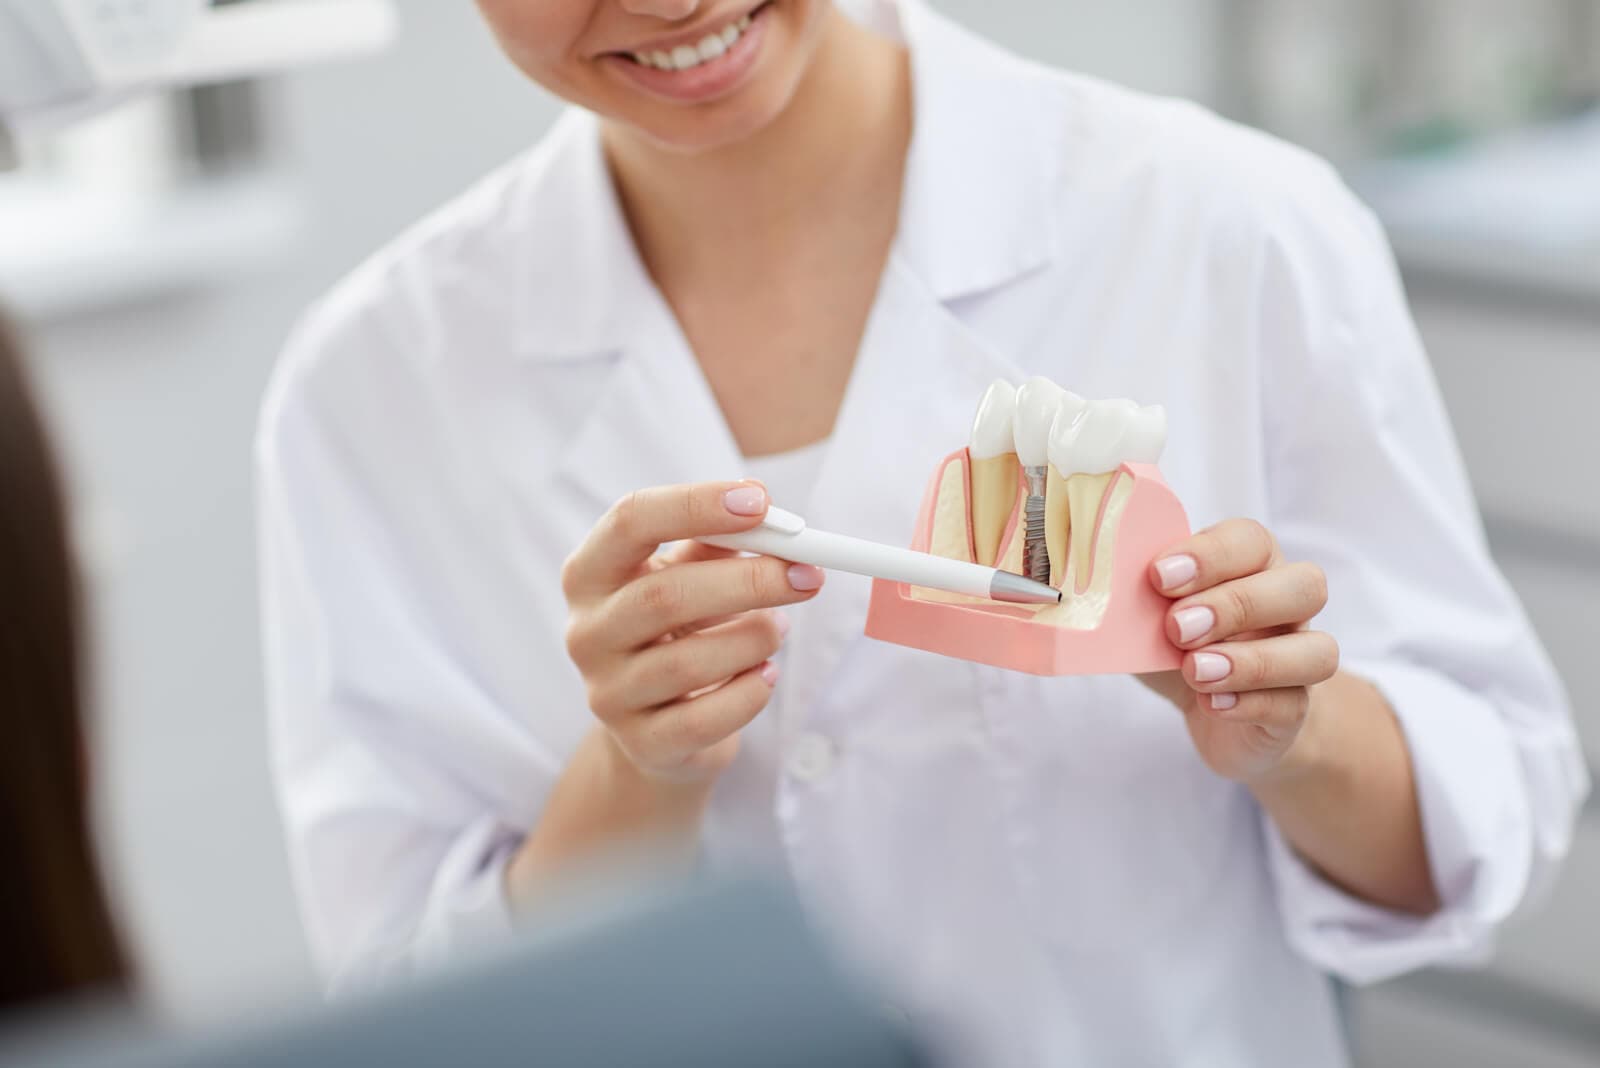 Clínica dental en vigo expertos en implantes dentales